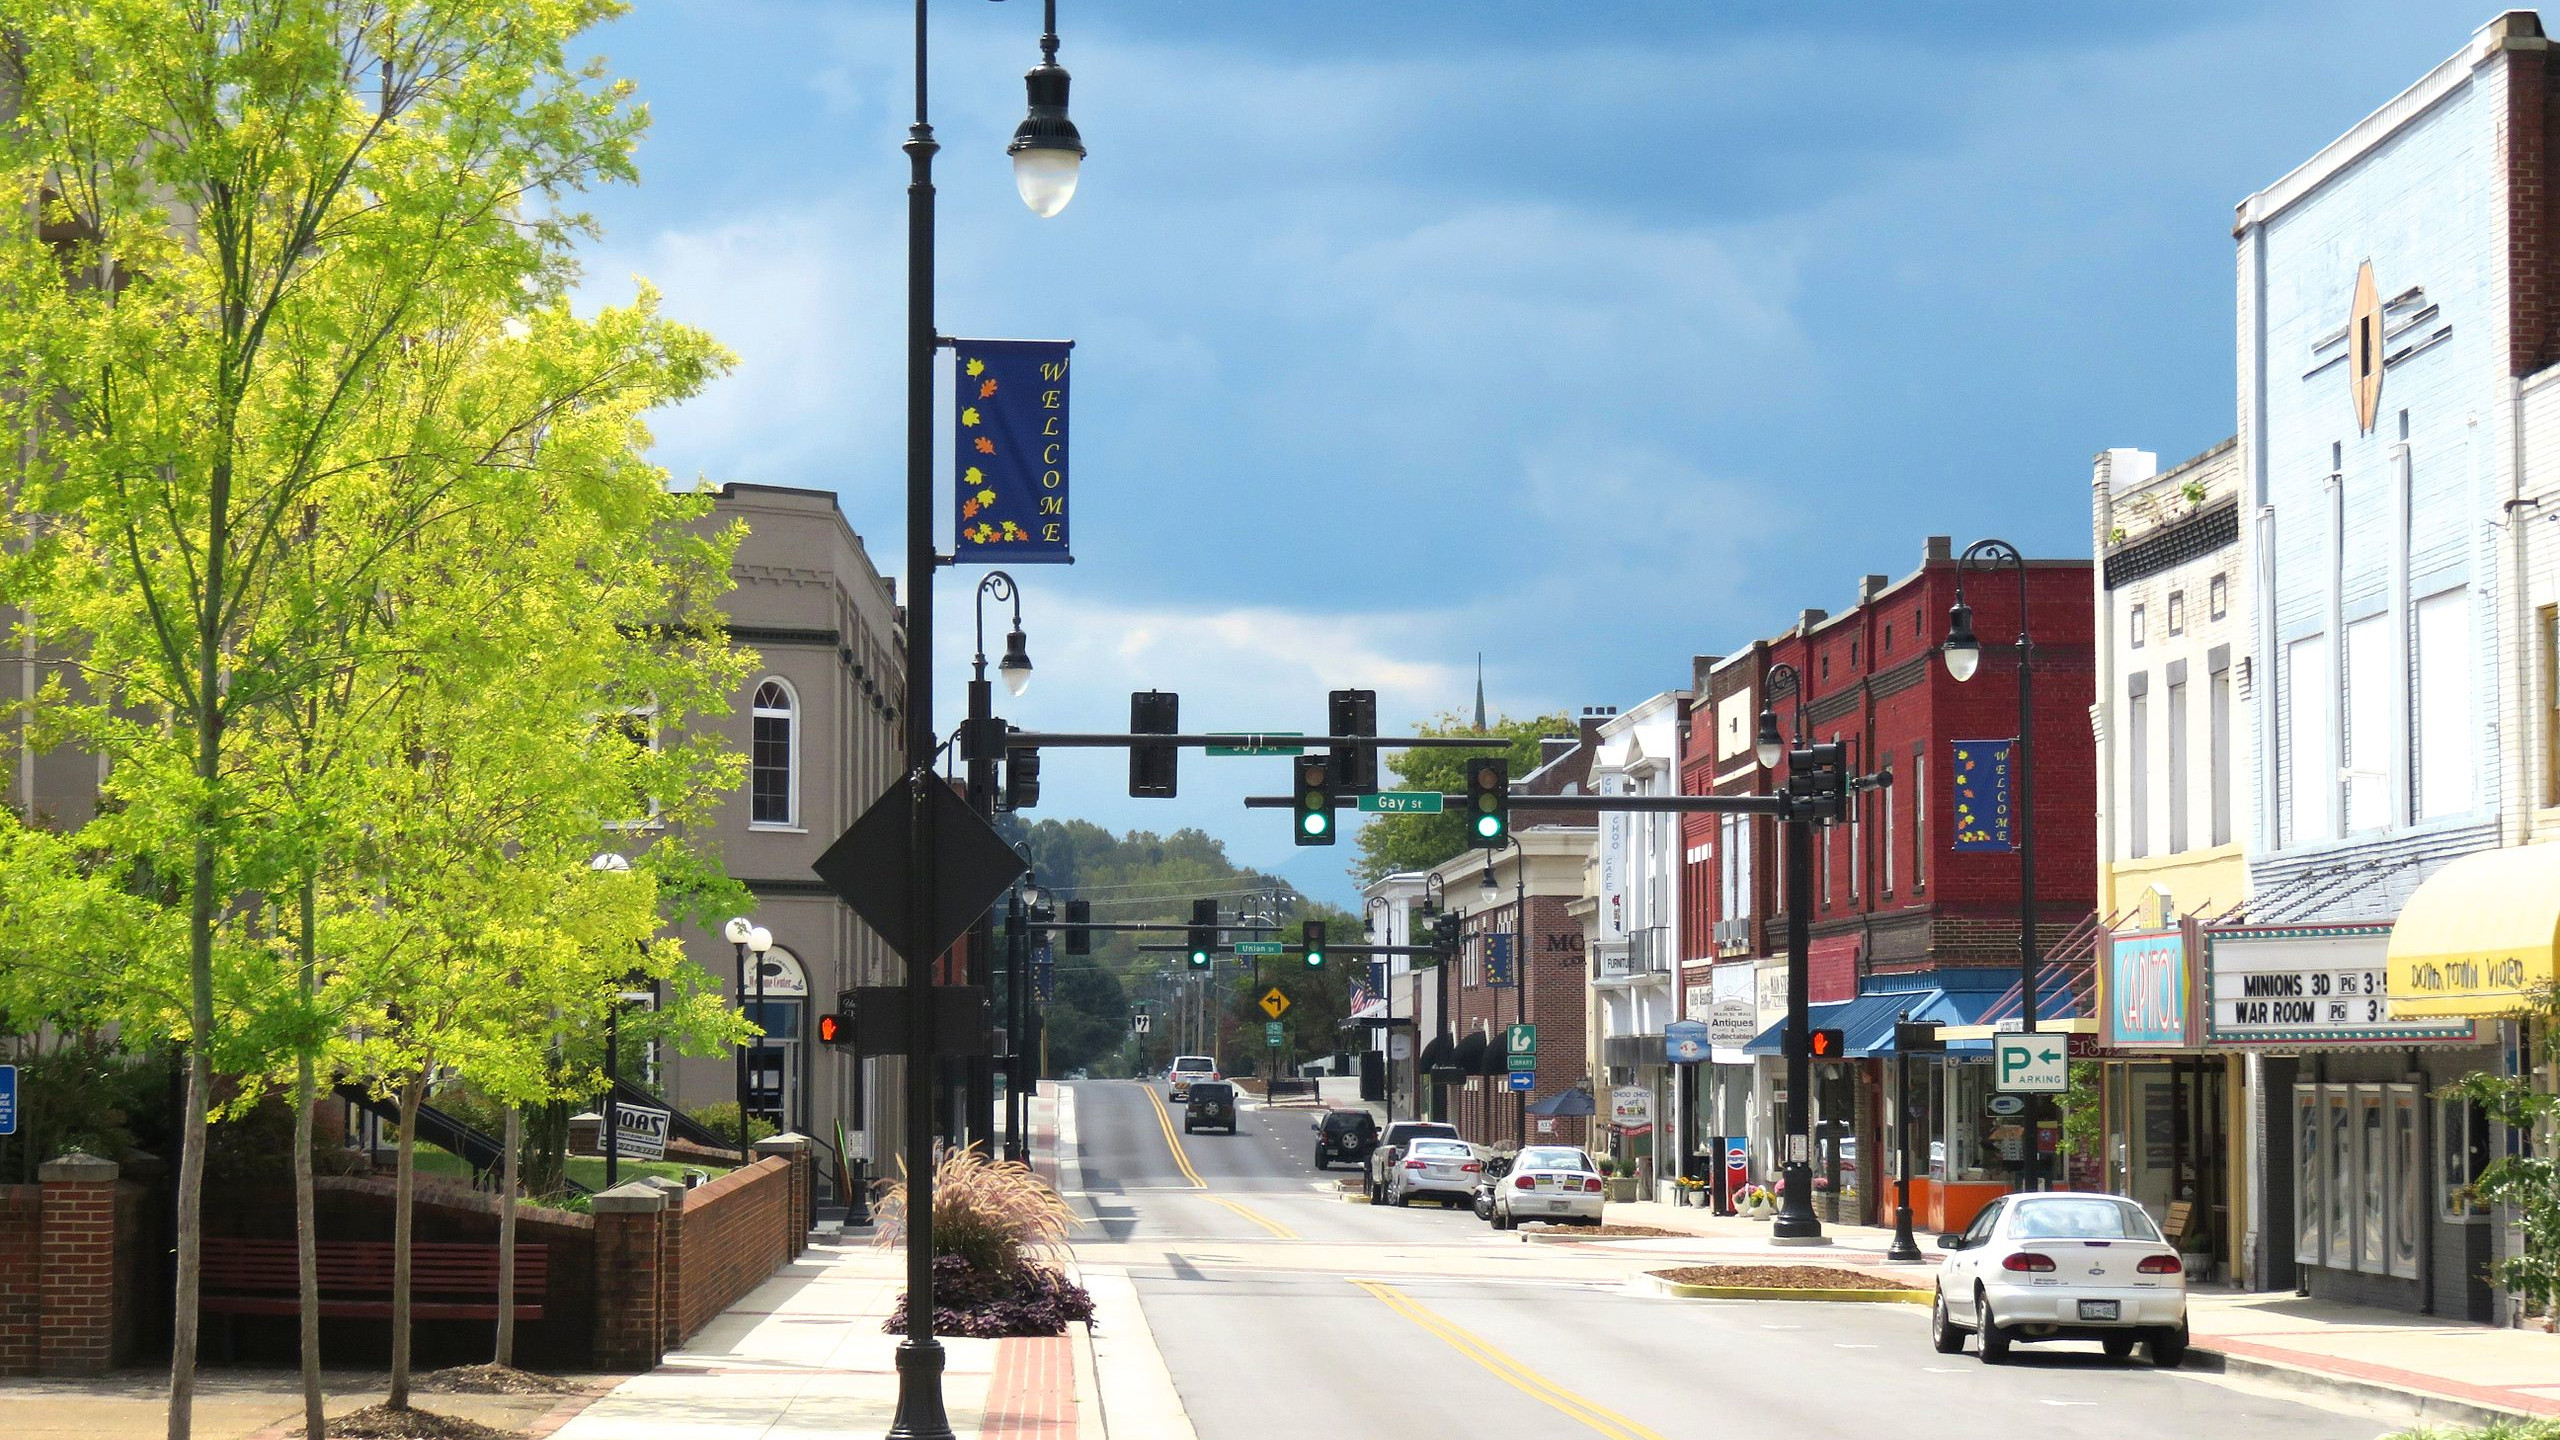 Photo of Main Street in downtown Erwin, TN